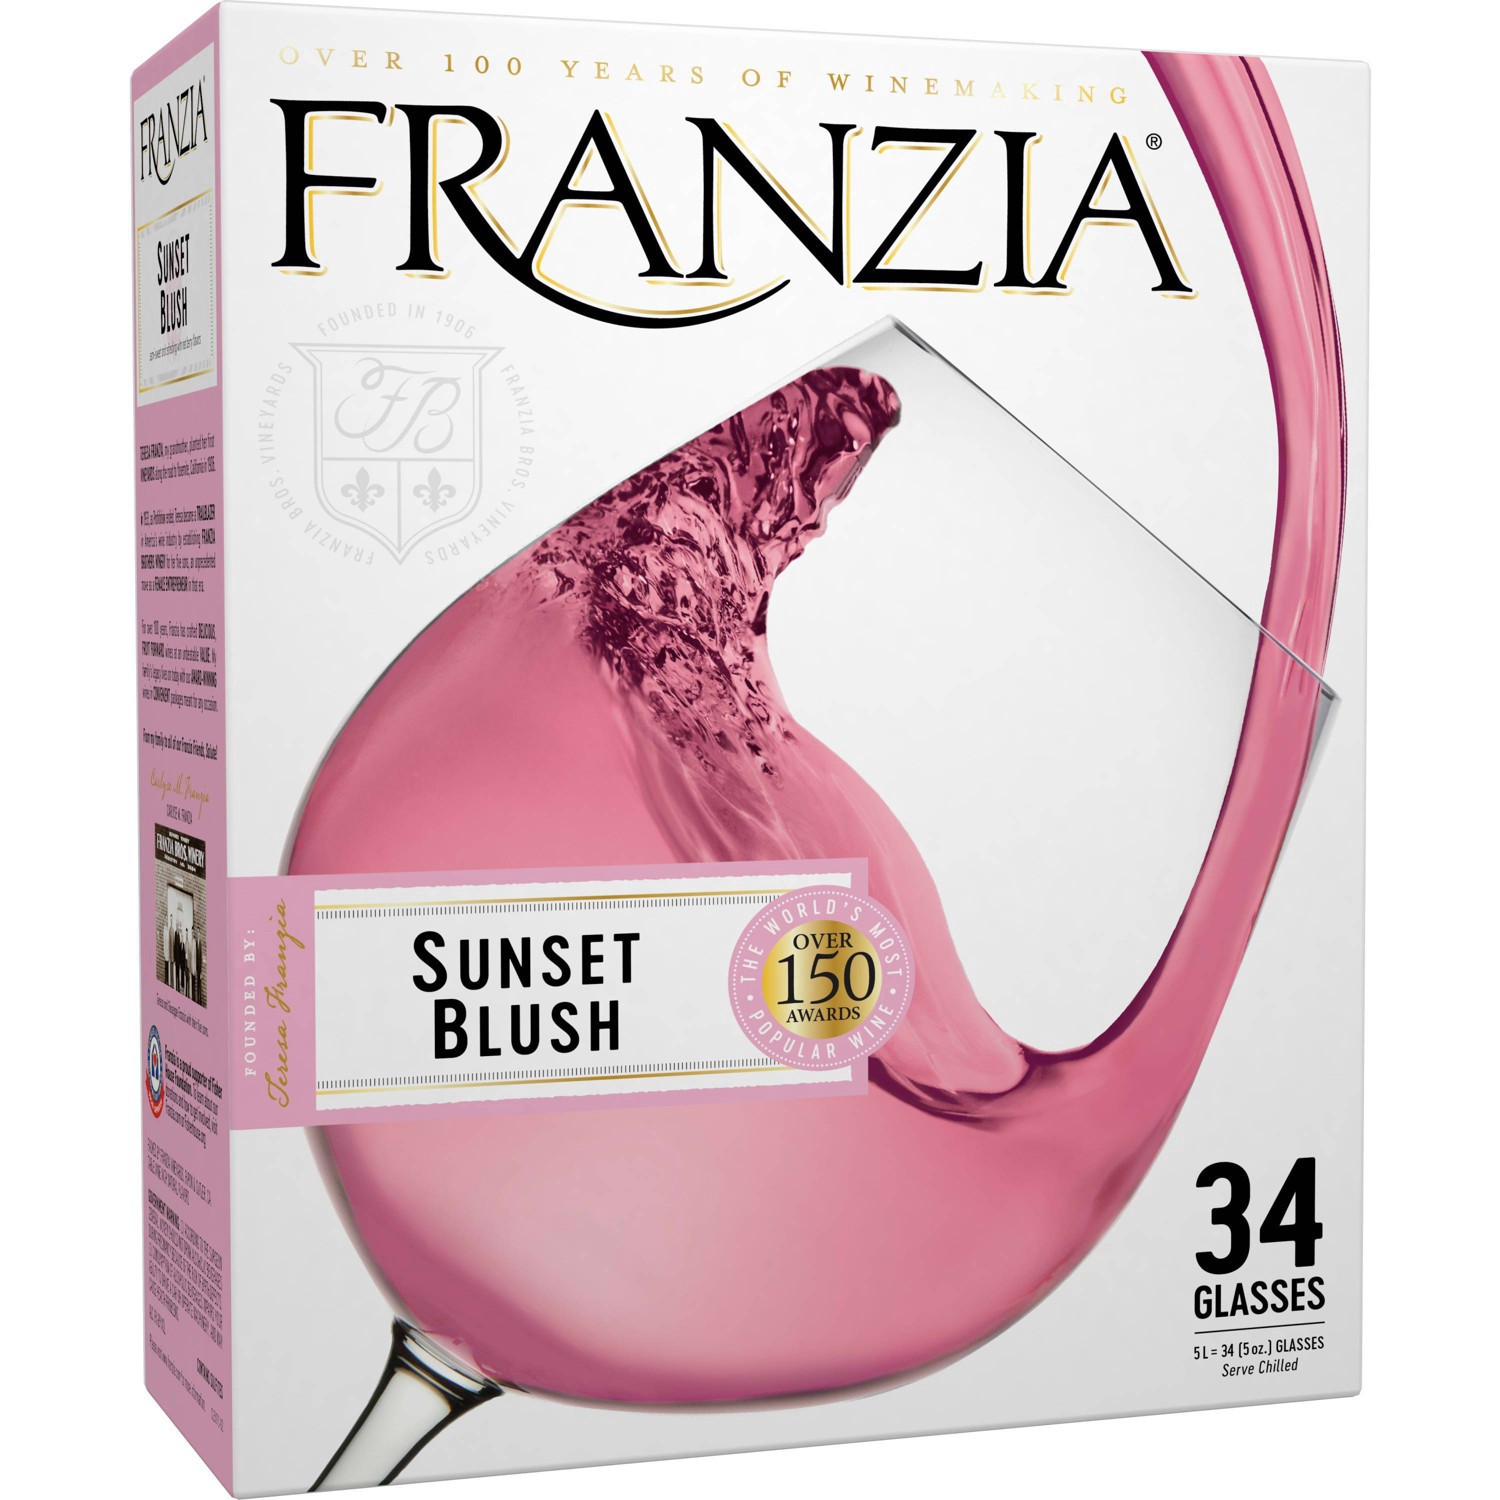 slide 1 of 27, Franzia Sunset Blush Pink Wine, 5 liter box